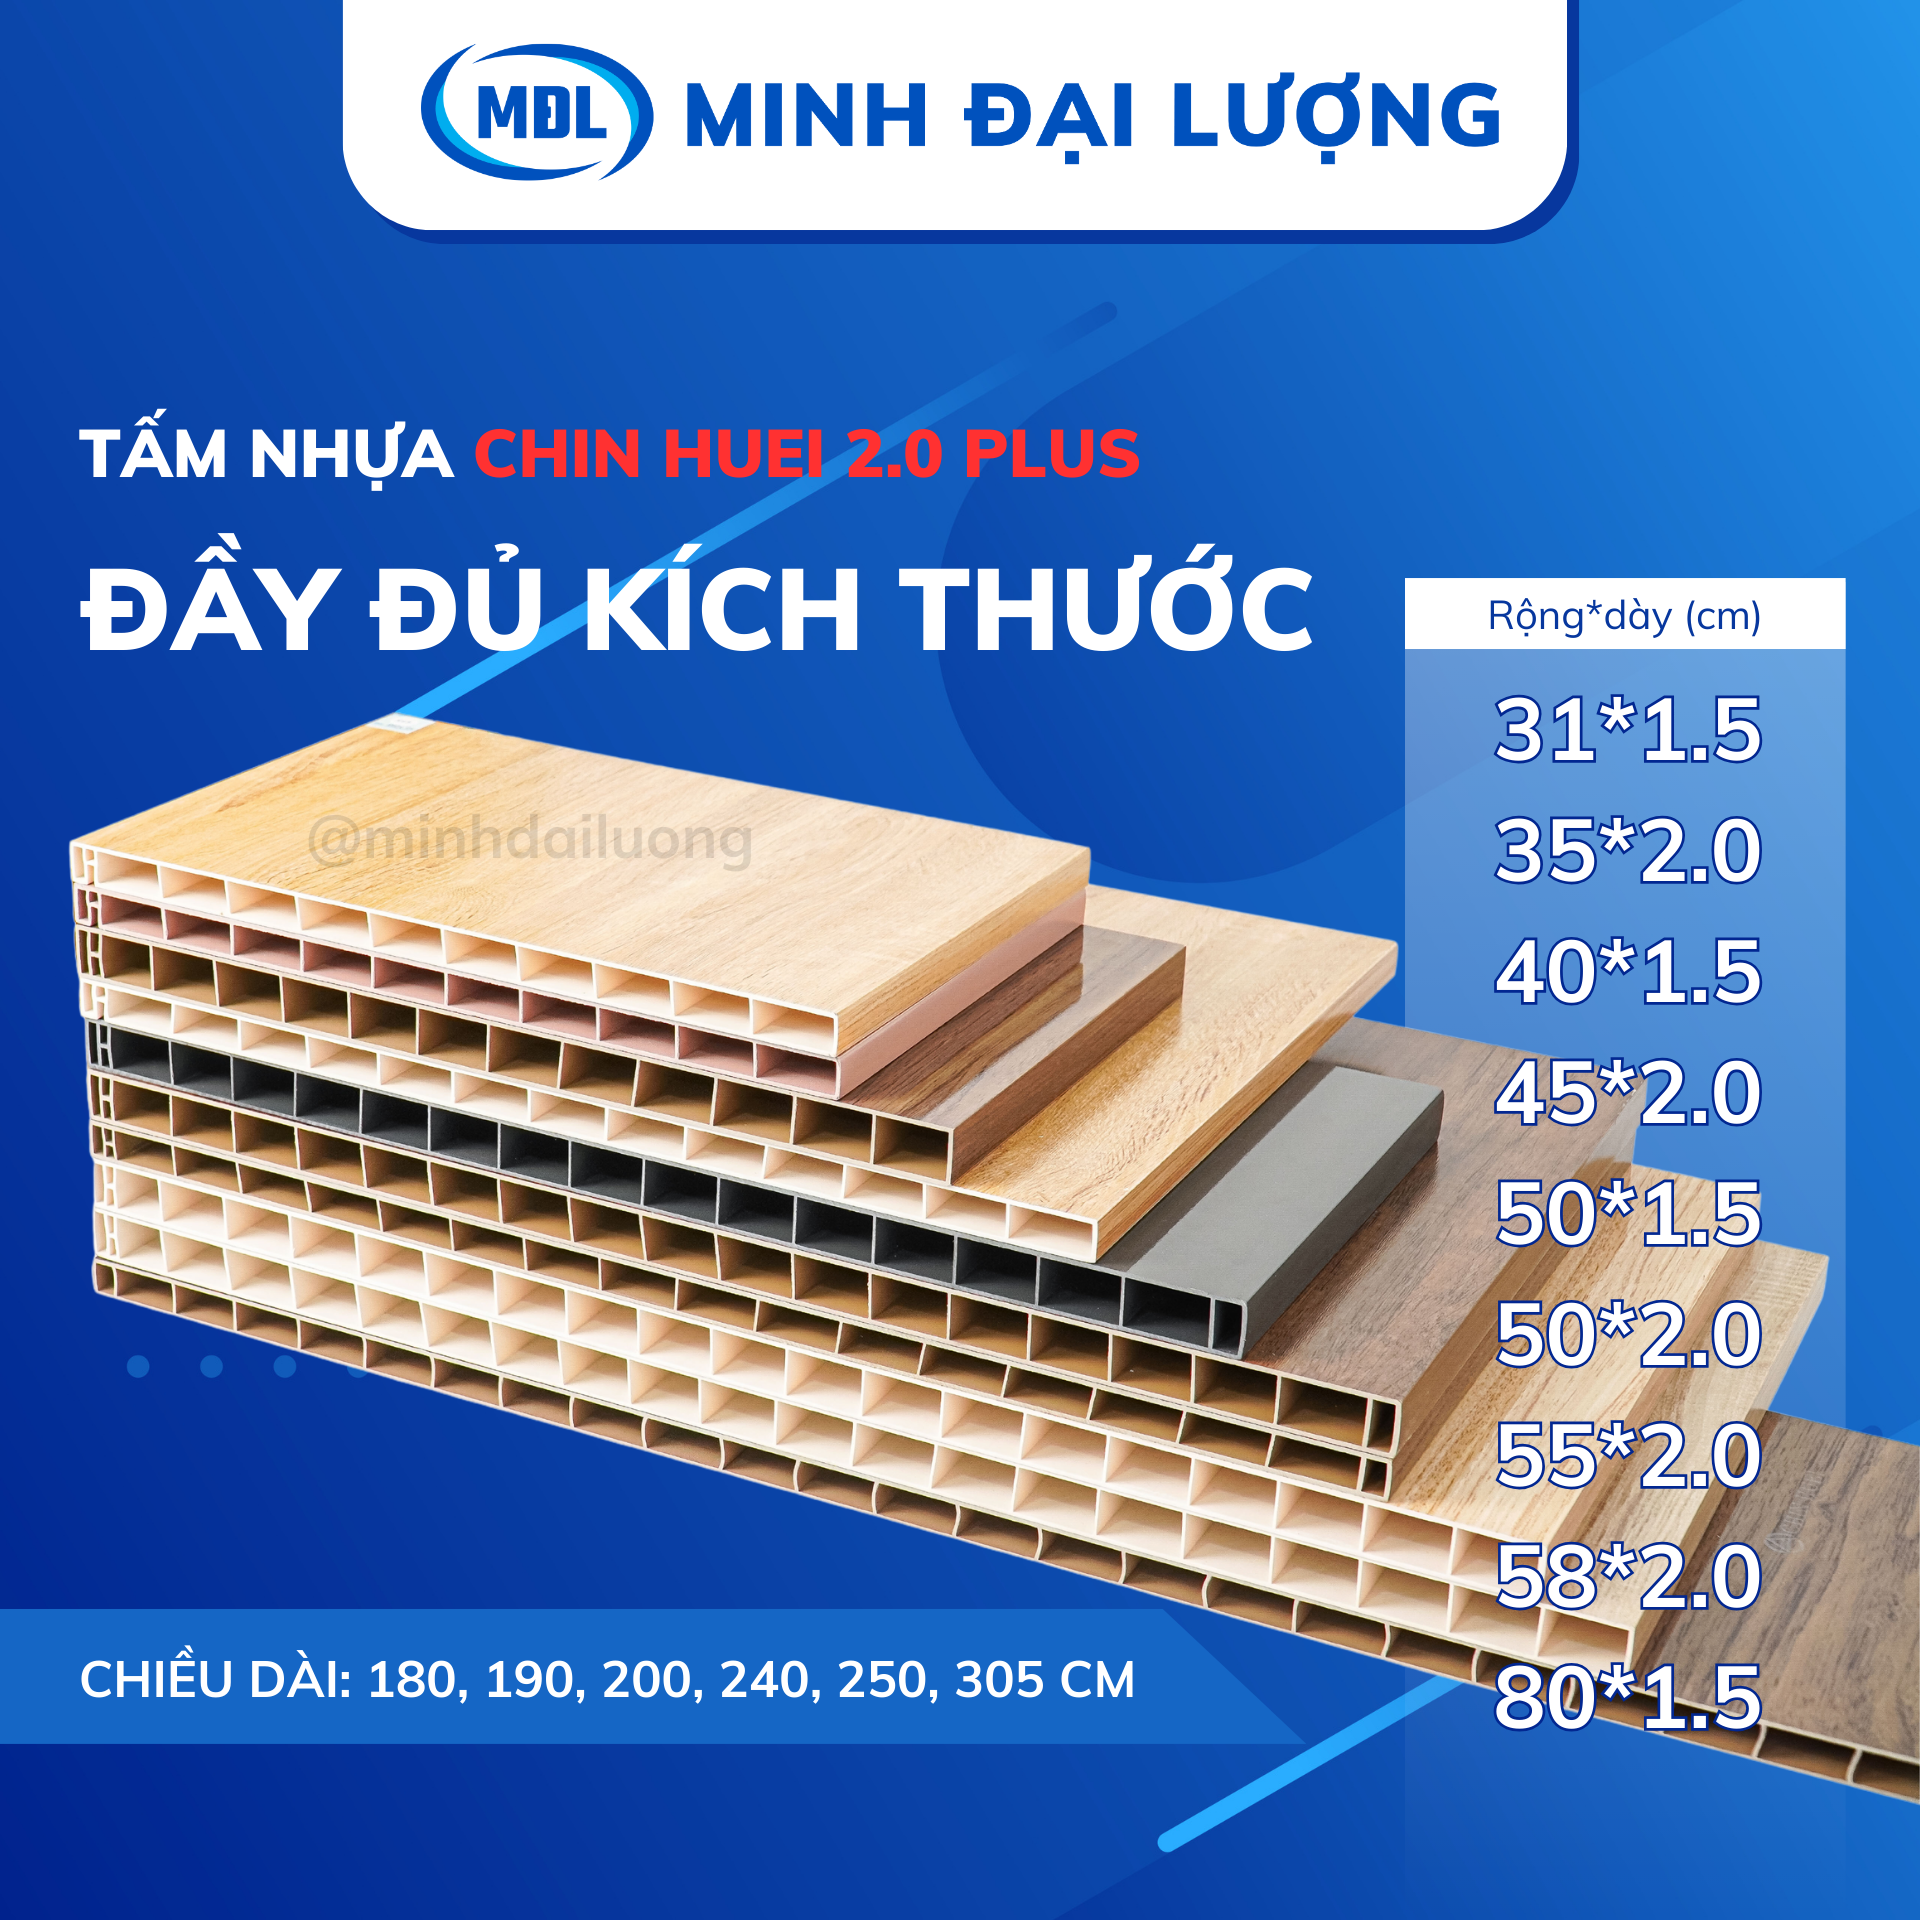 Tấm nhựa nội thất cao cấp Chin Huei 2.0 Plus